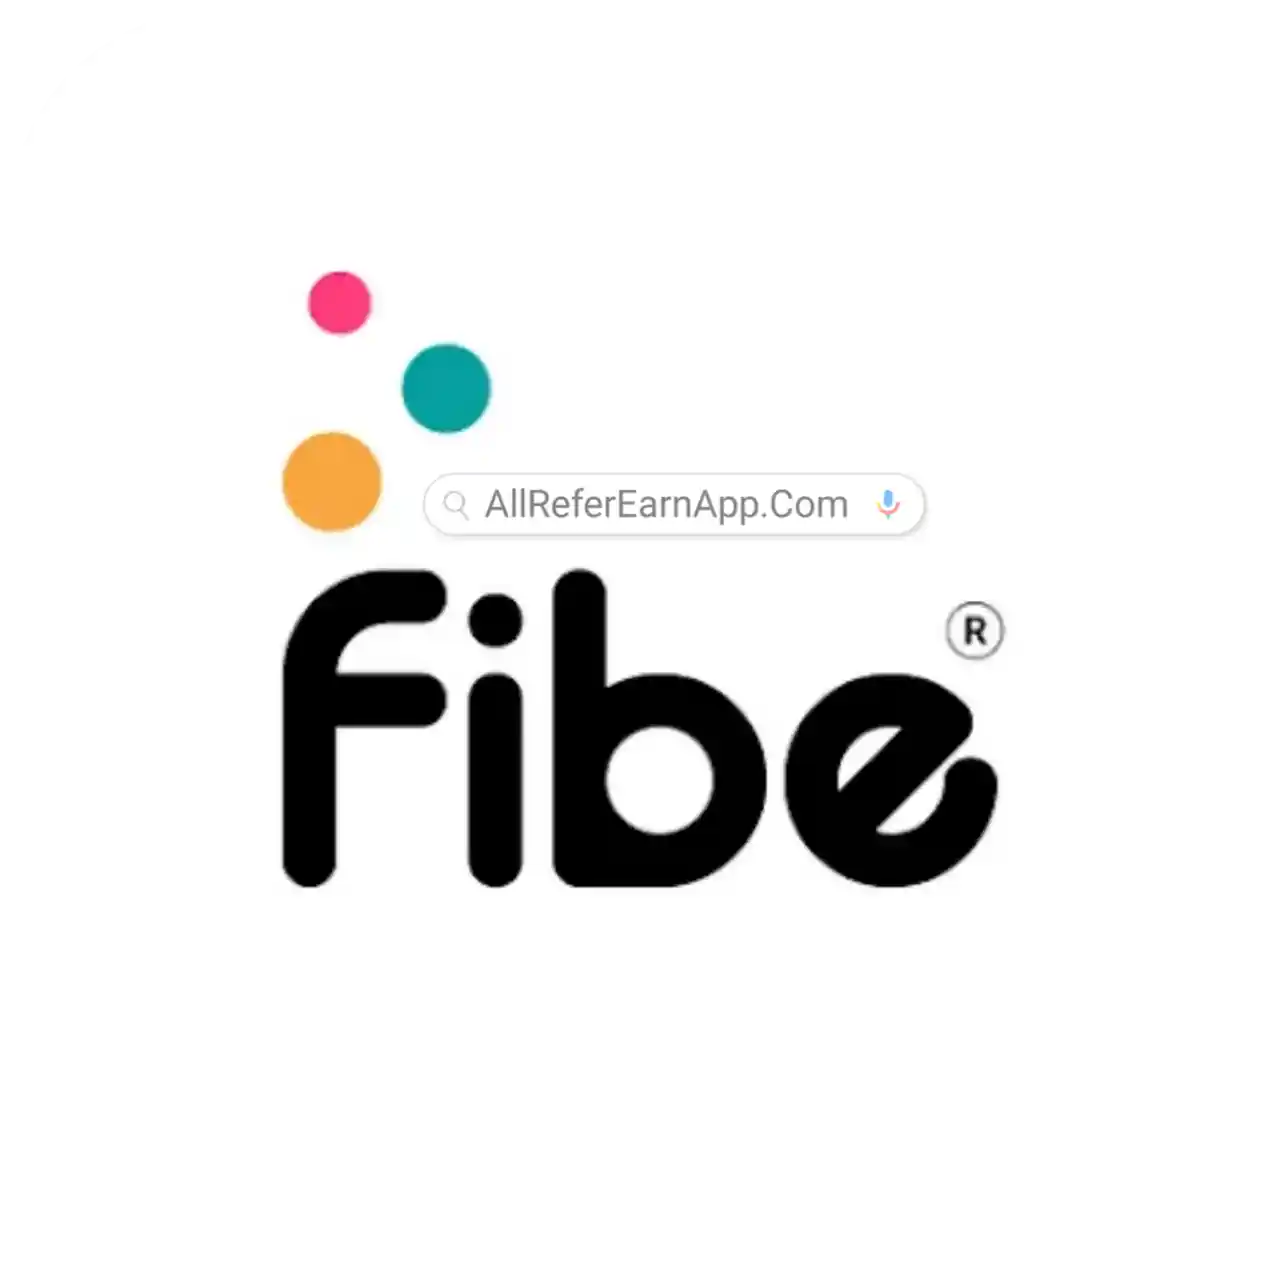 Fibe Refer & Earn - All Refer Earn App List